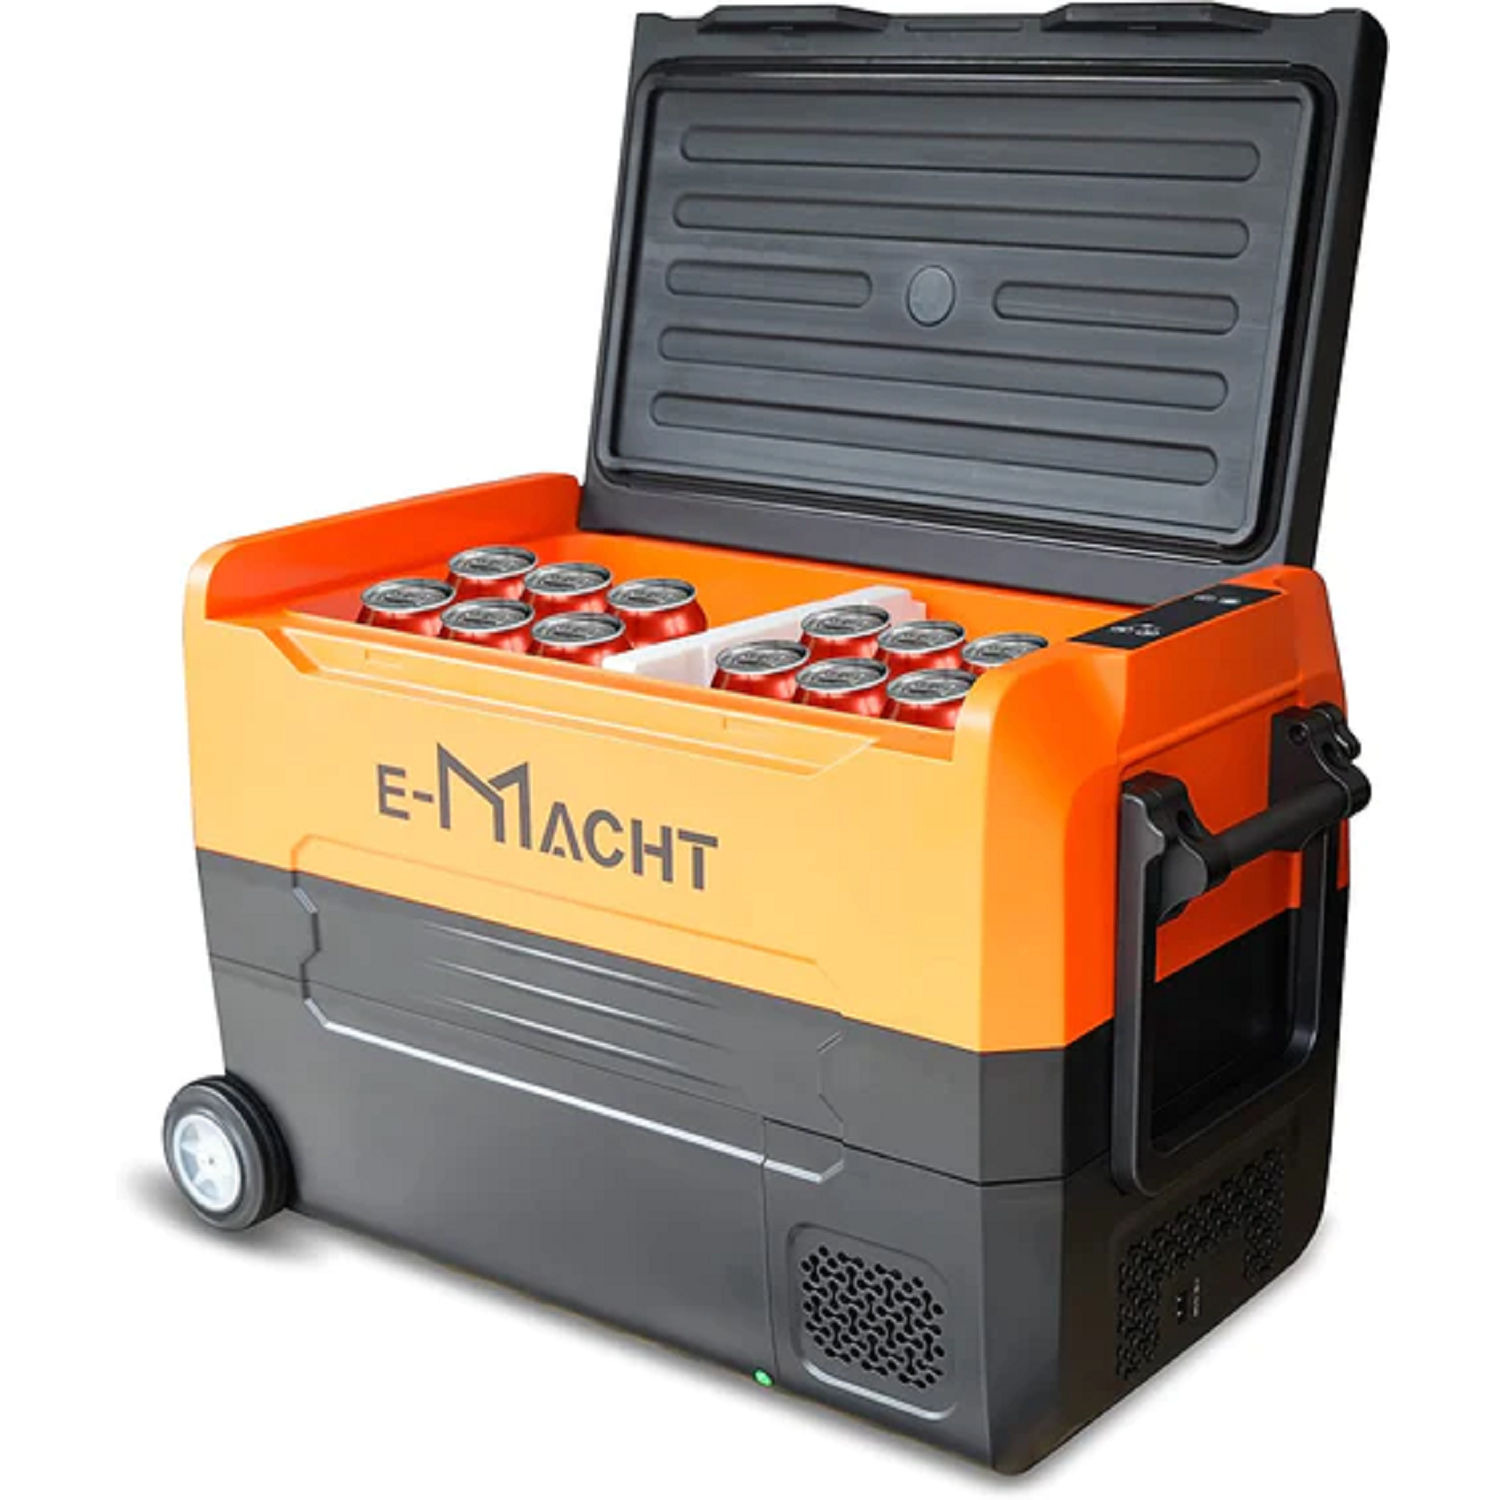 E-Macht Car Refrigerator Portable Dual-zone Freezer, 40L Capacity with LED Lights